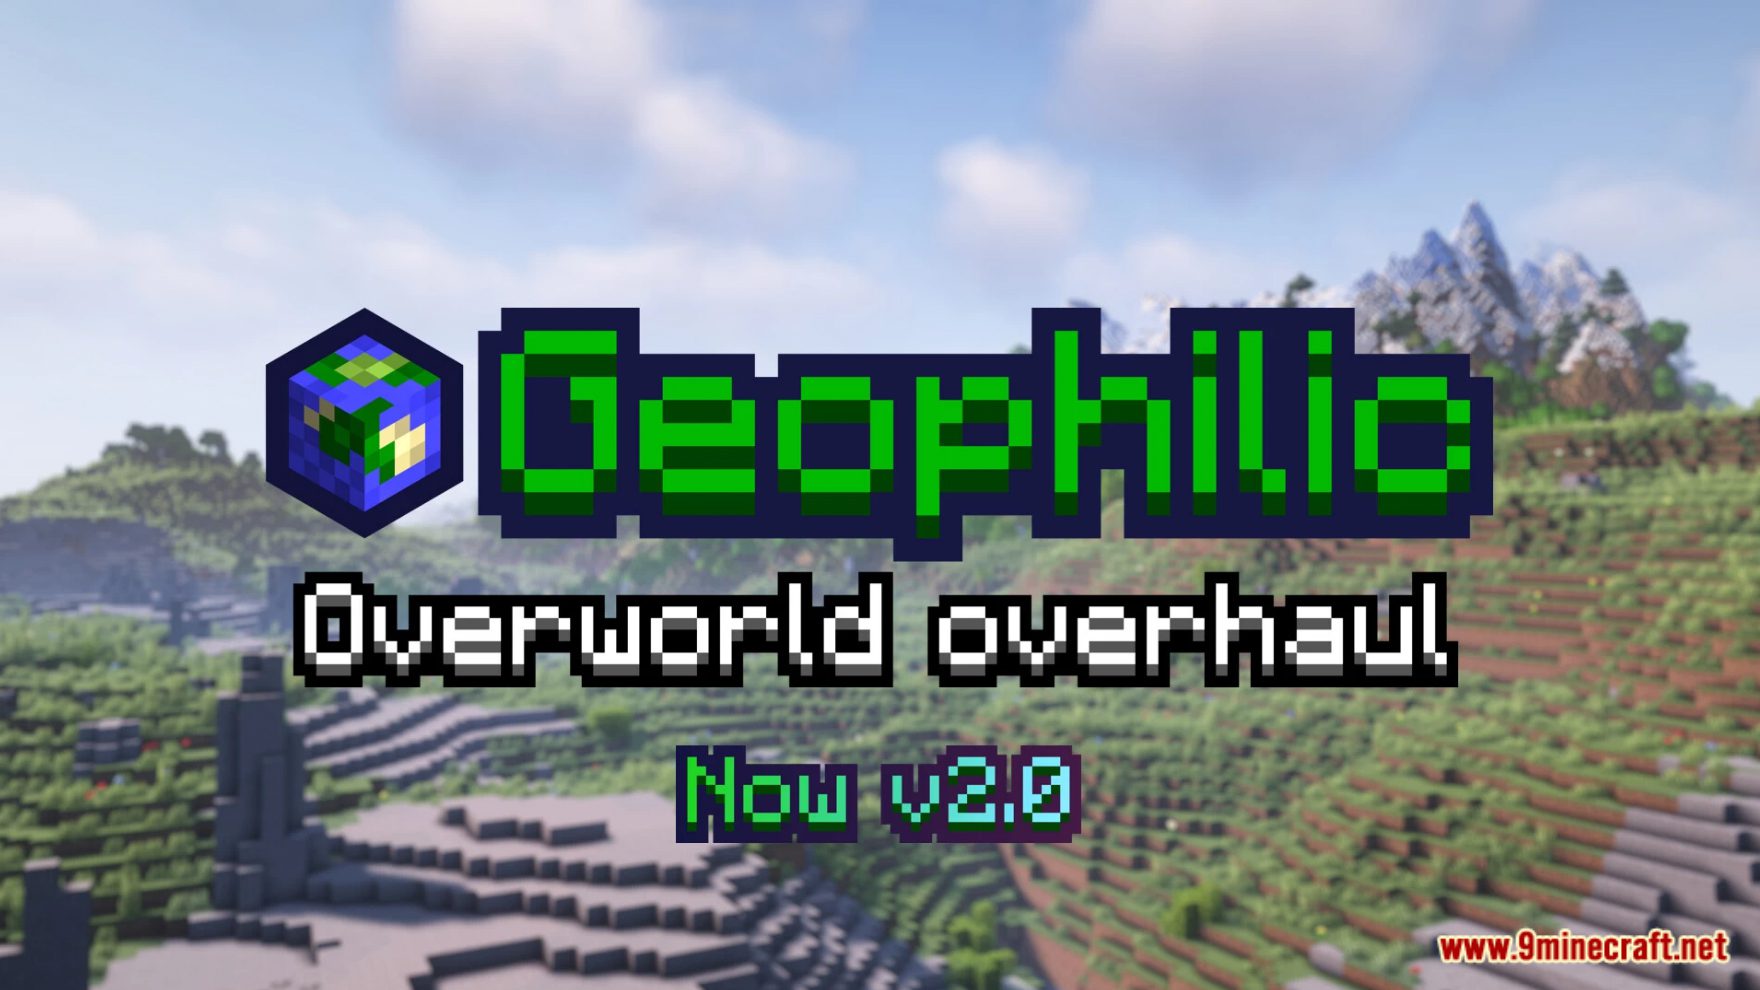 Geophilic Data Pack (1.21, 1.20.1) - Overworld Overhaul! 2